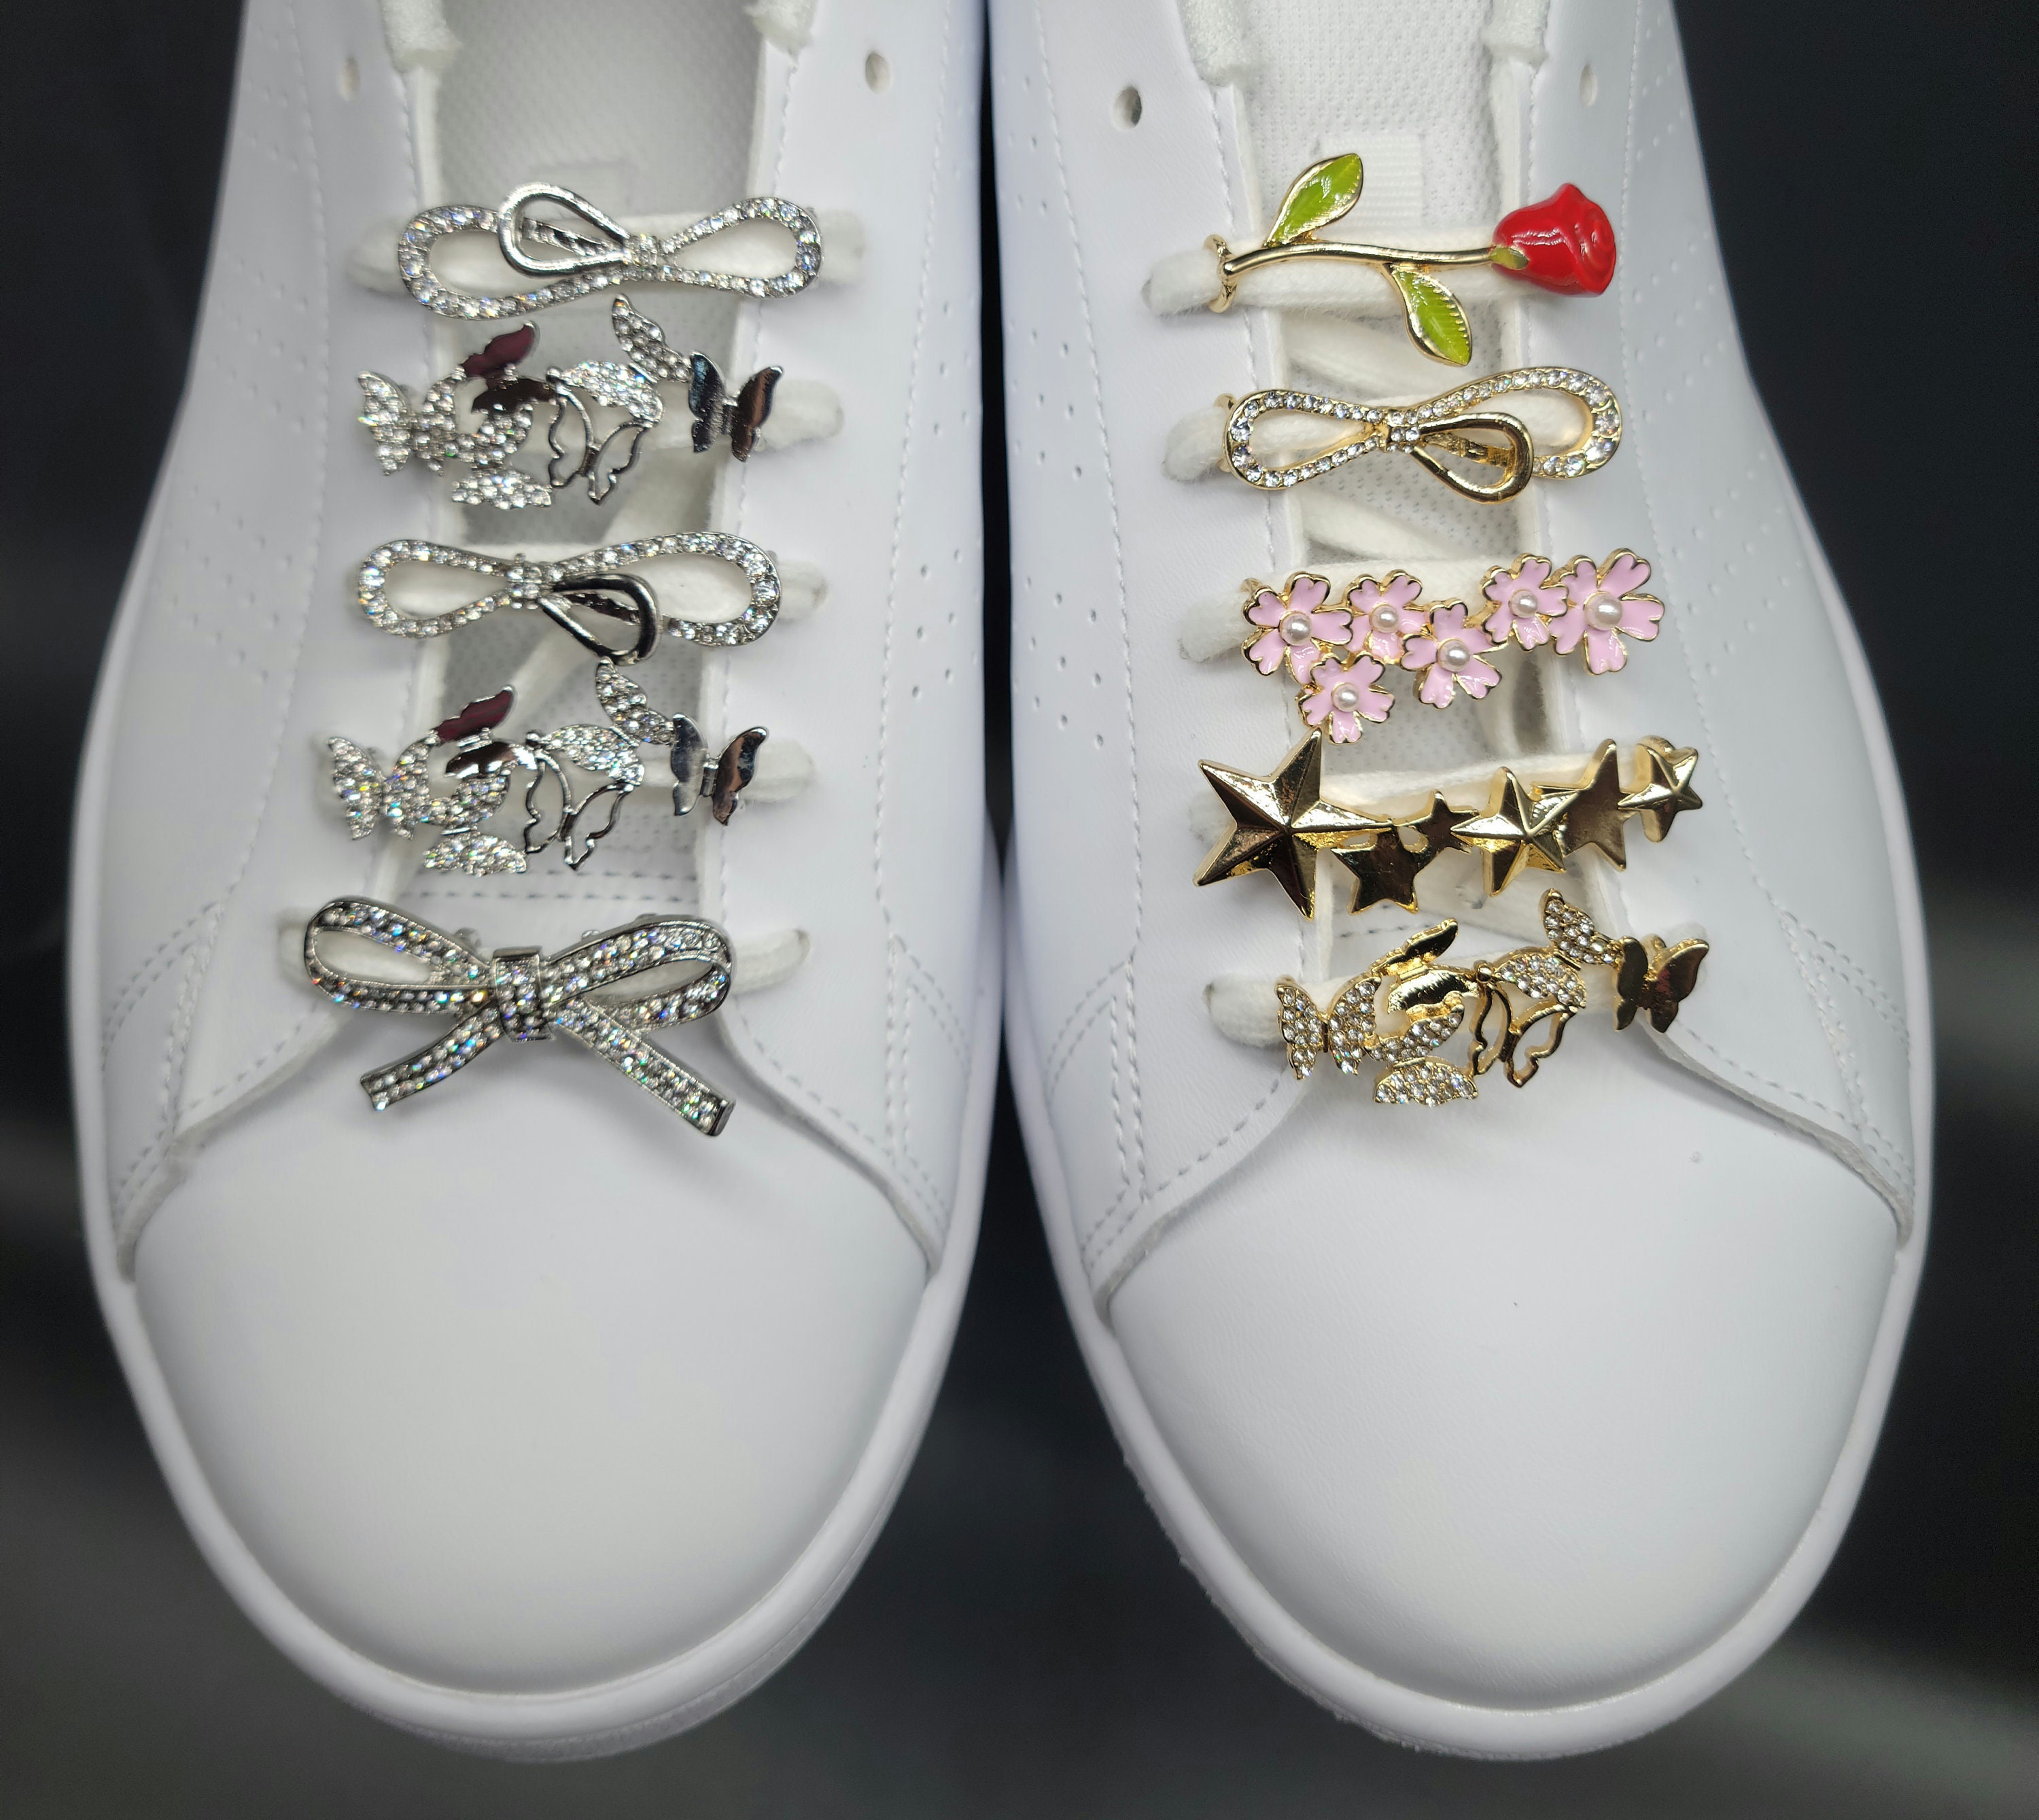 14pcs Fashion Faux Pearl Flower + Rhinestone Star Shoe Charms For Crocs  Clogs Sandals Decoration, Shoes DIY Accessories